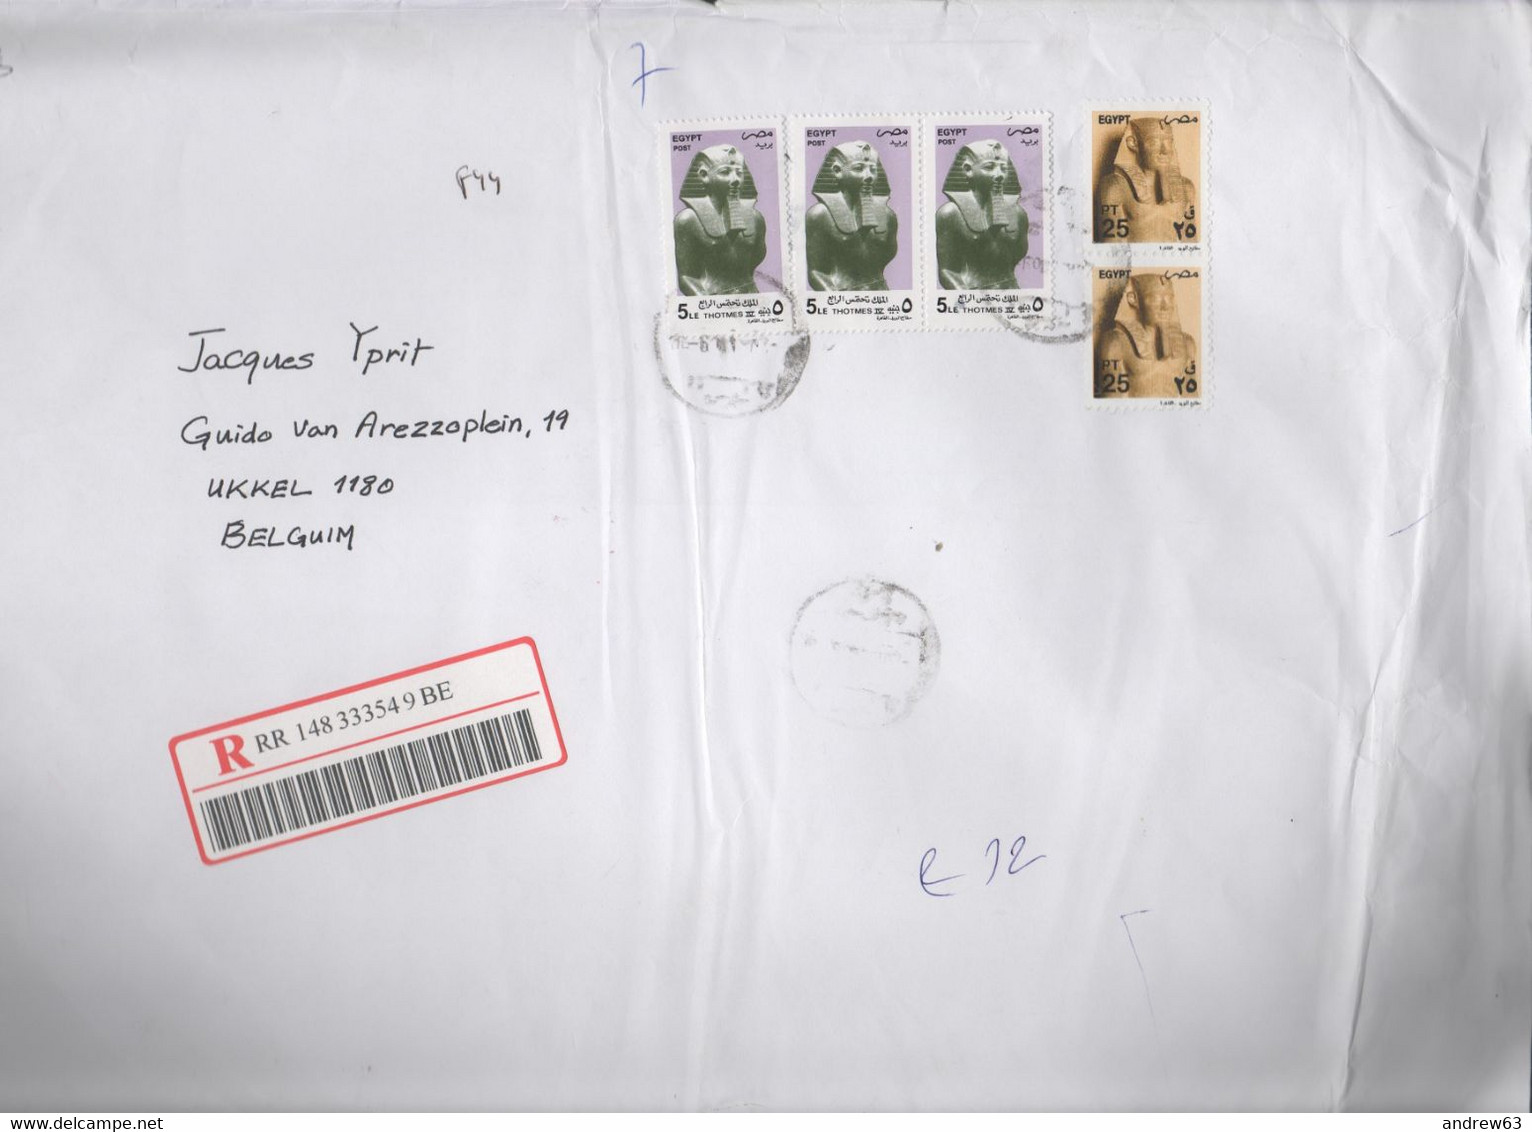 EGITTO - EGYPTE - Egypt - 2006 - 3 X 5 + 2 X 25 - Registered - Big Envelope -Viaggiata Da Alexandria Per Ukkel,Bruxelles - Lettres & Documents